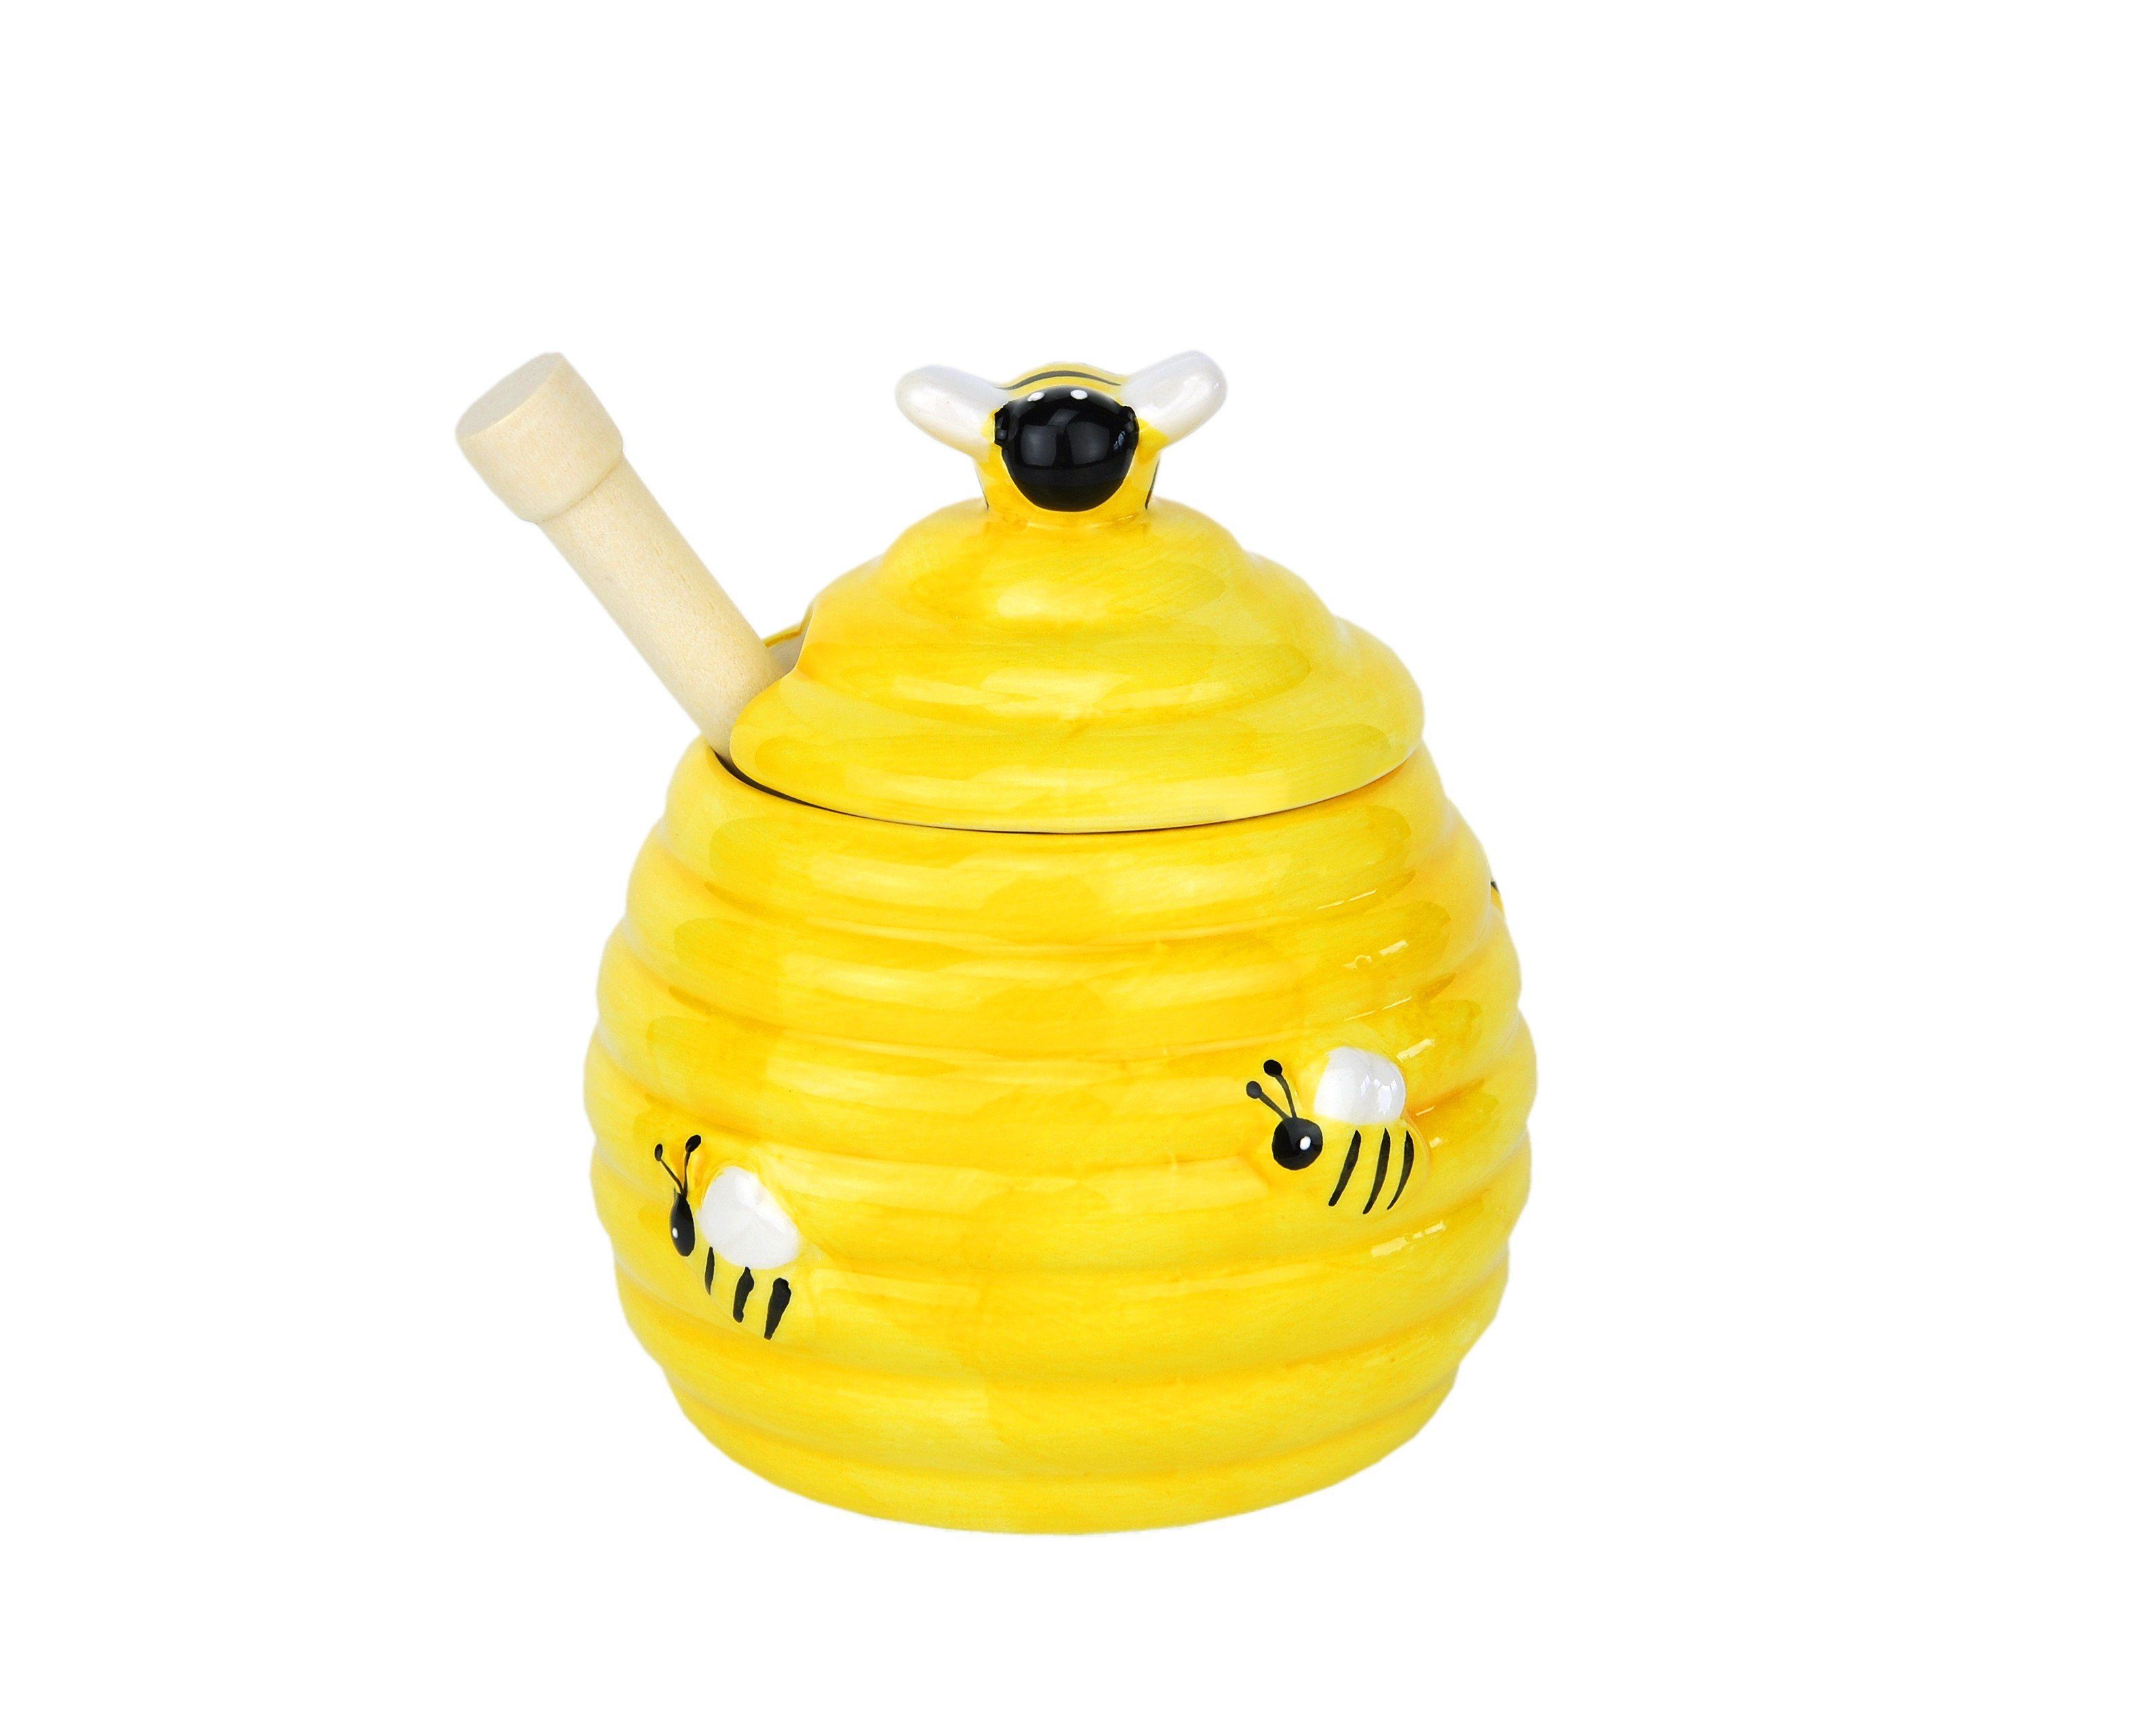 MamboCat Vorratsglas Honigtopf mit Honiglöffel Bienenstockoptik Keramik Honig Honigheber, Steingut